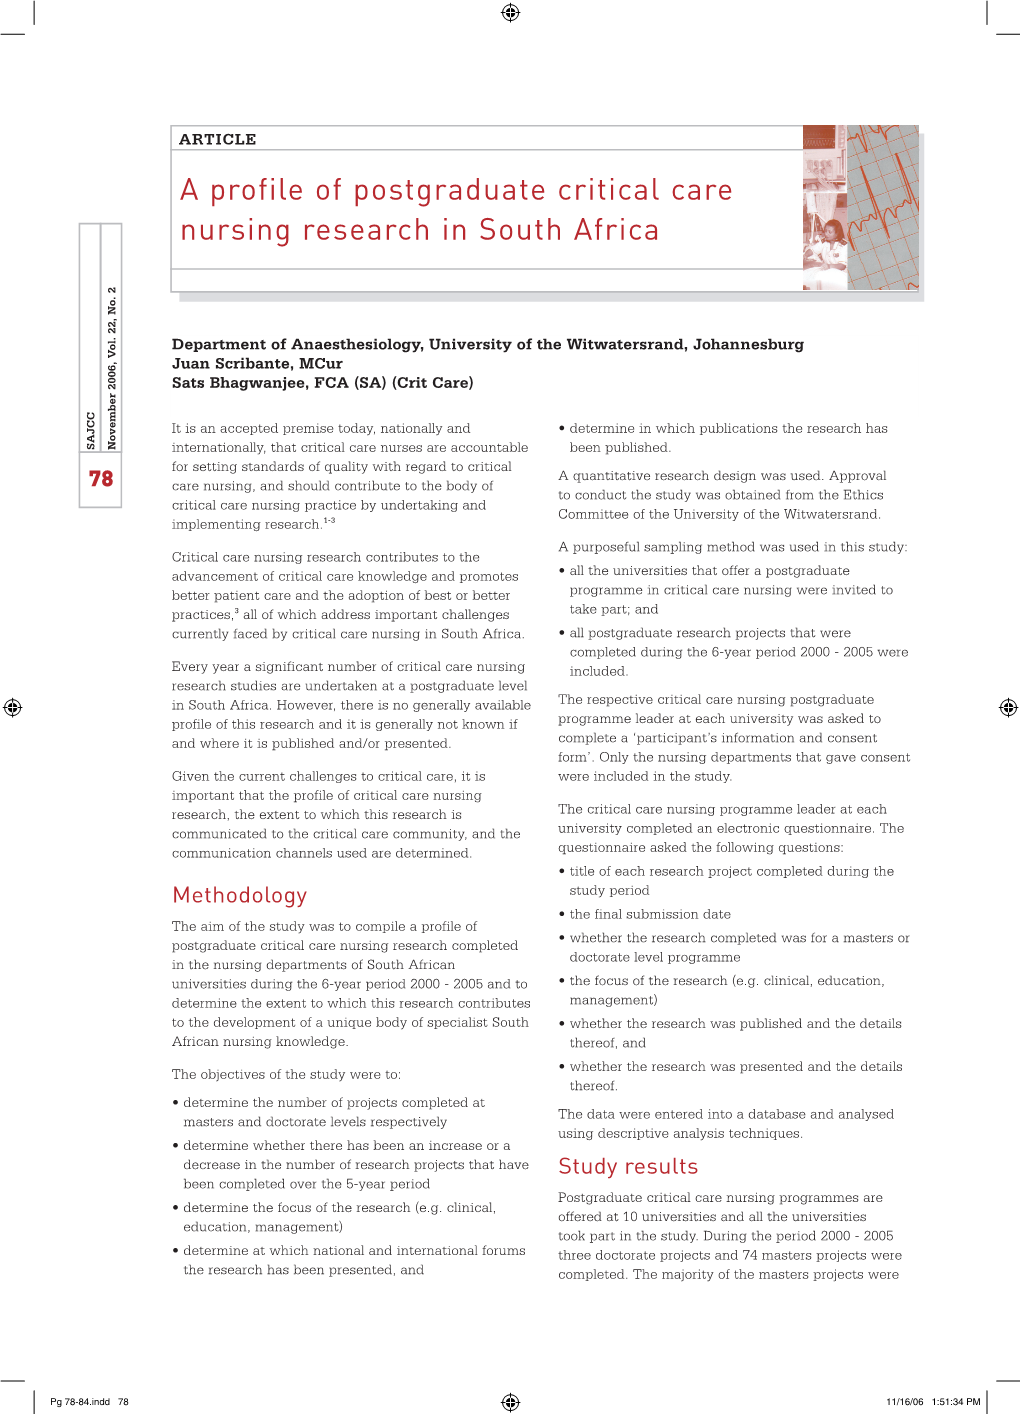 A Profile of Postgraduate Critical Care Nursing Research in South Africa